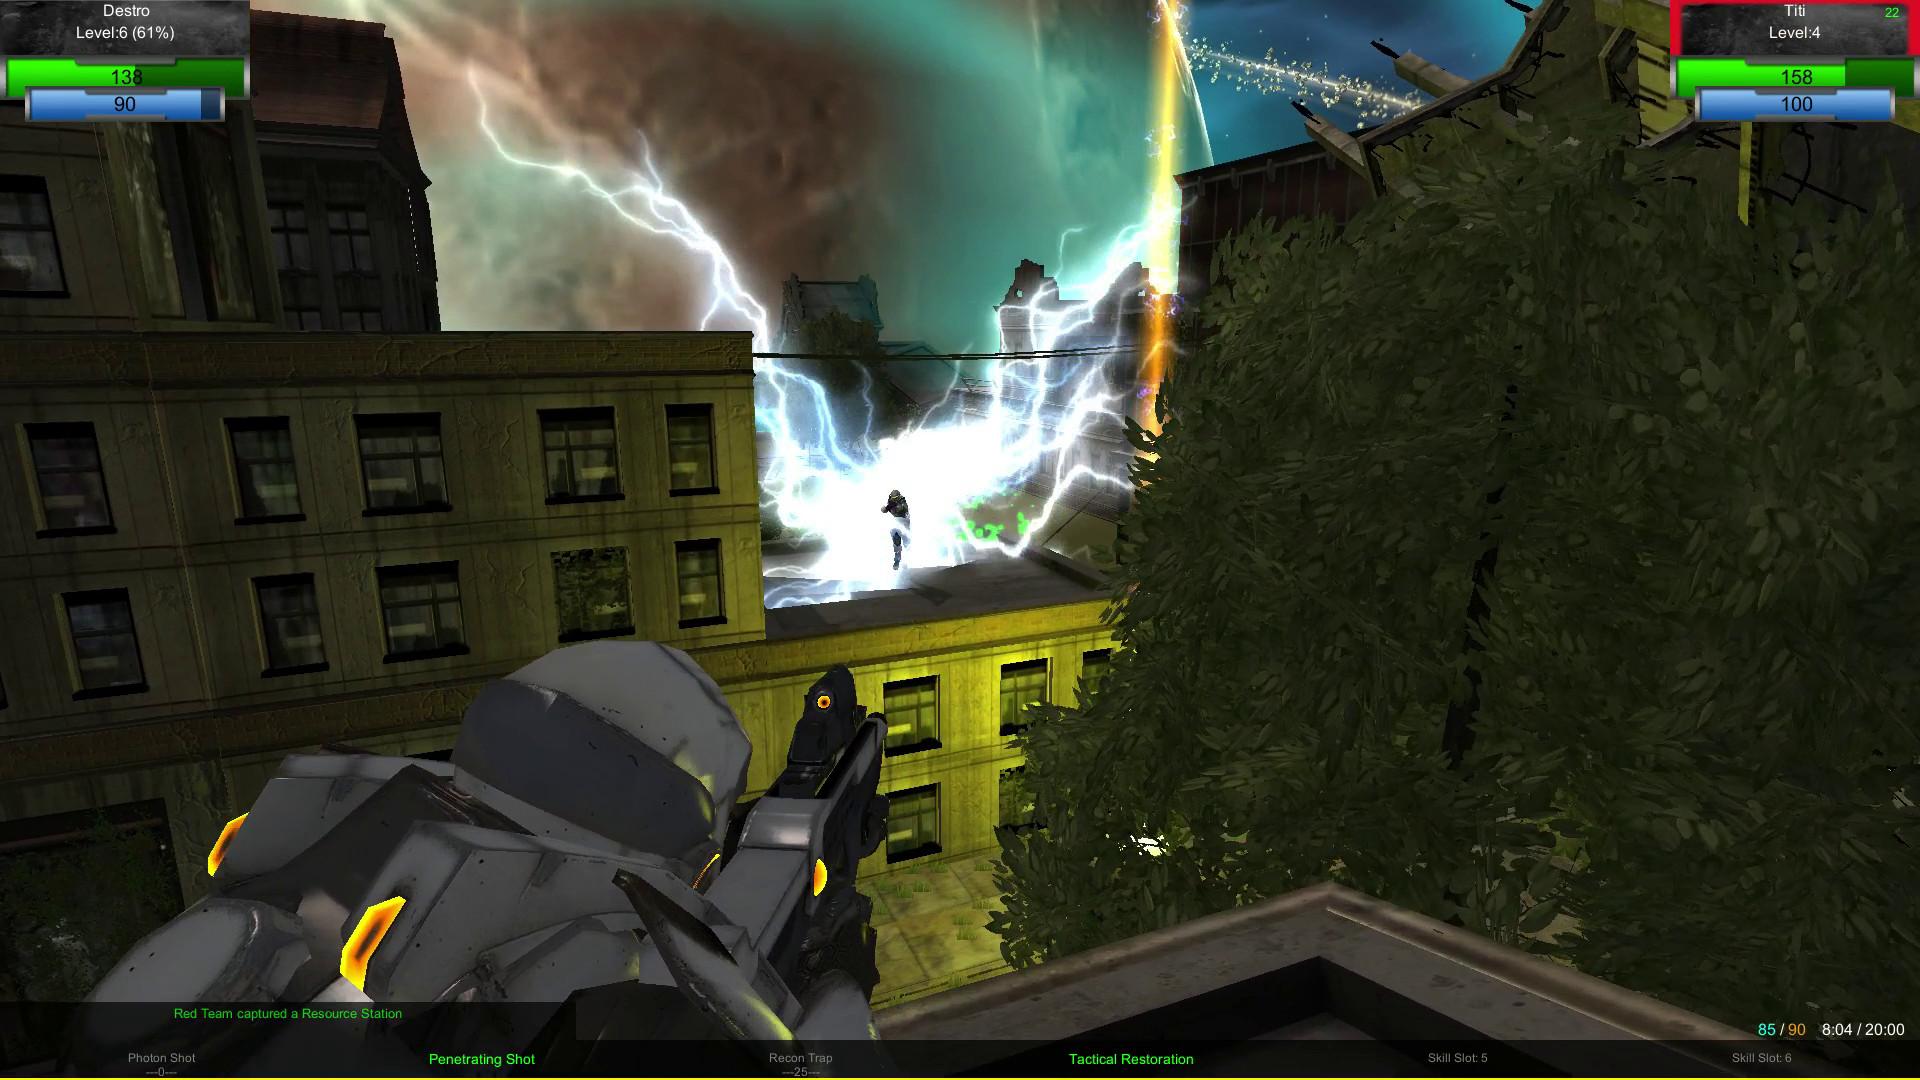 Screenshot №1 from game CLASH